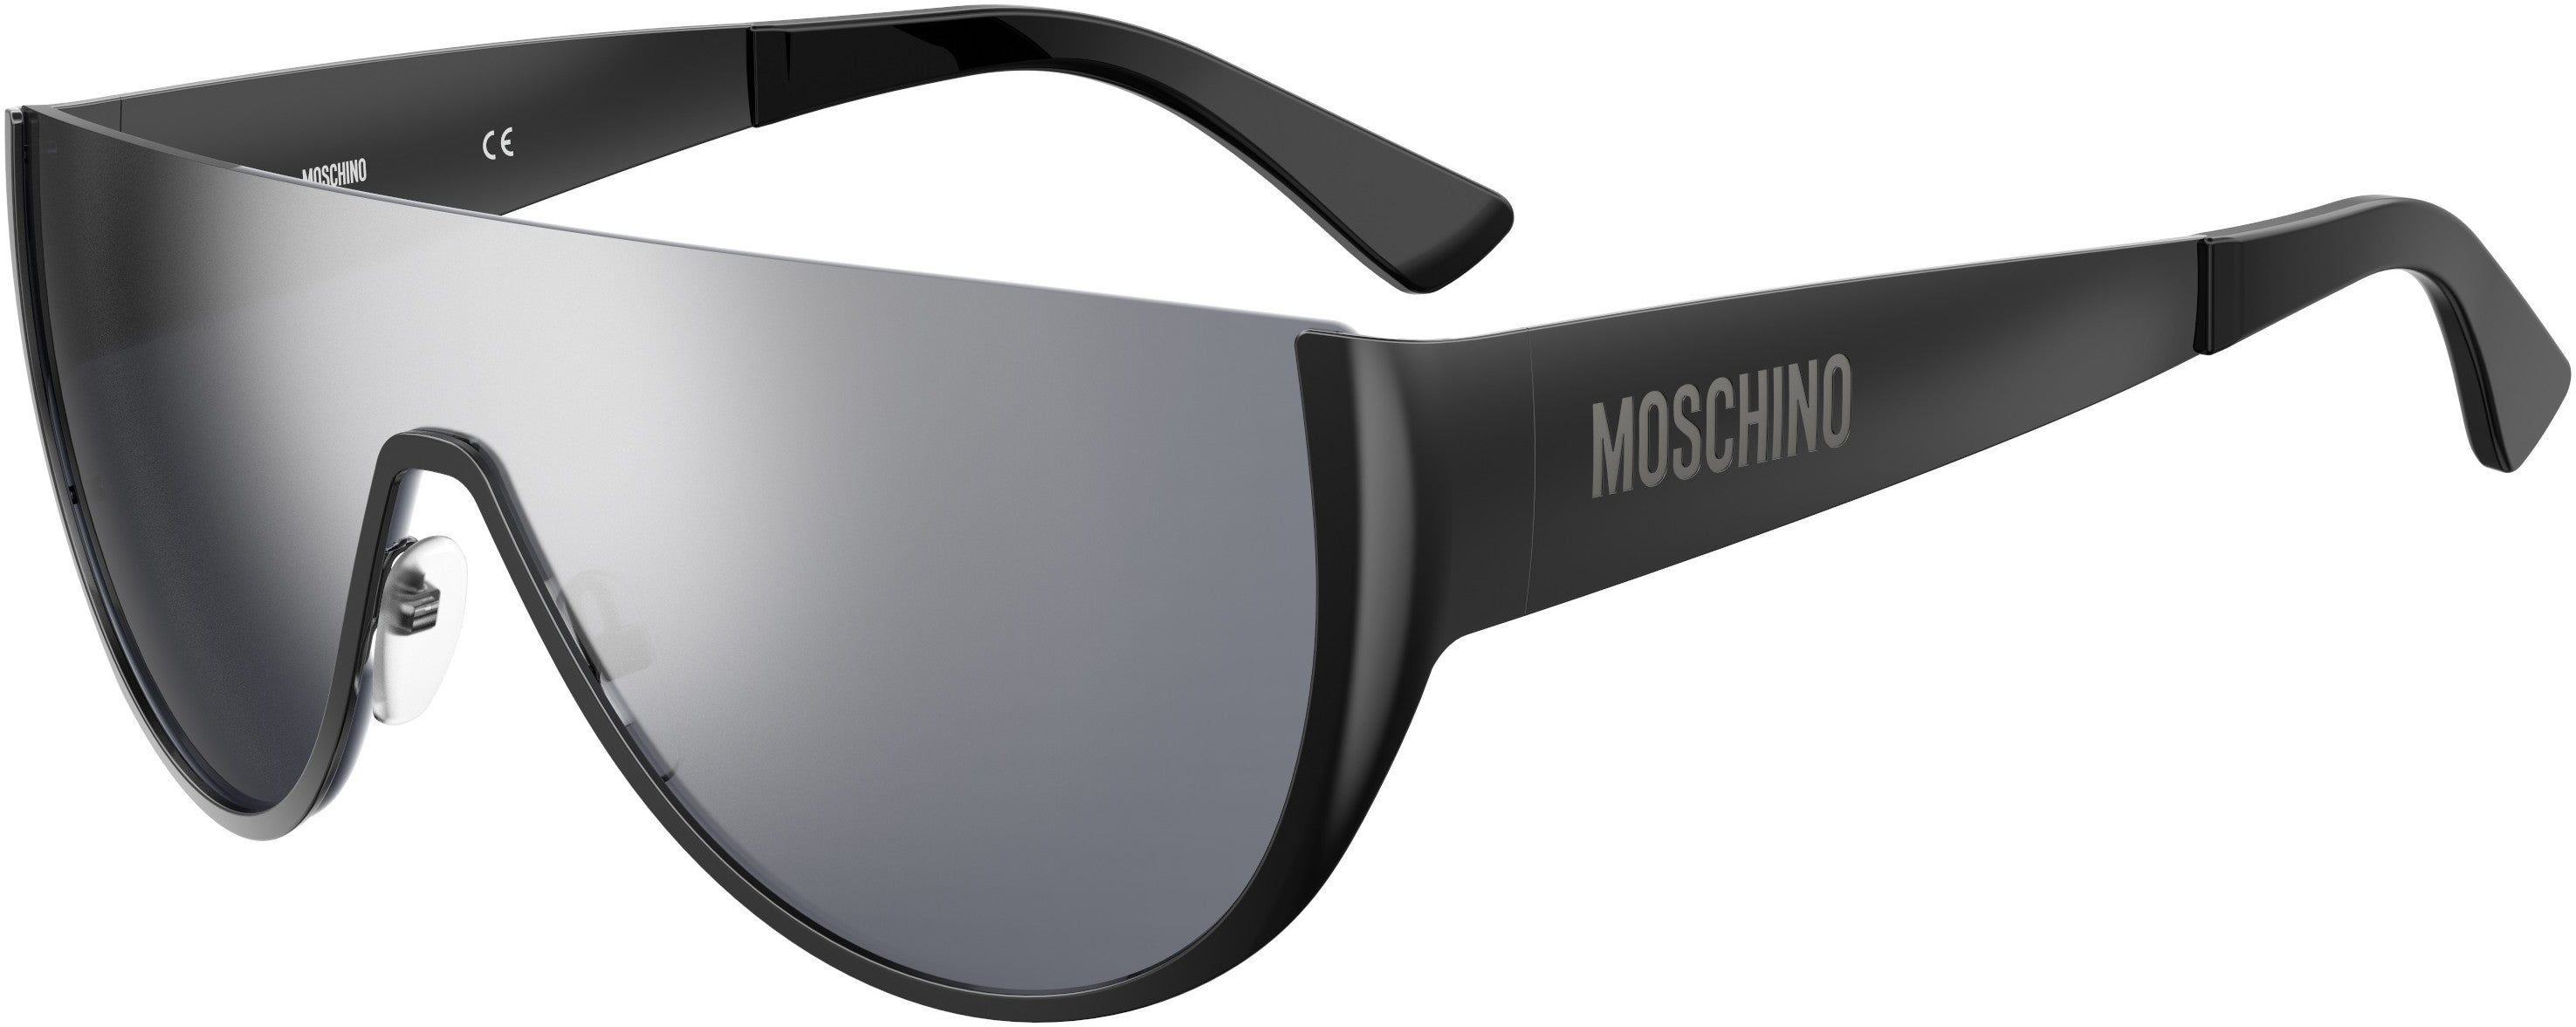  Moschino 062/S Special Shape Sunglasses 0V81-0V81  Dark Ruthenium Black (T4 Silver Mirror)